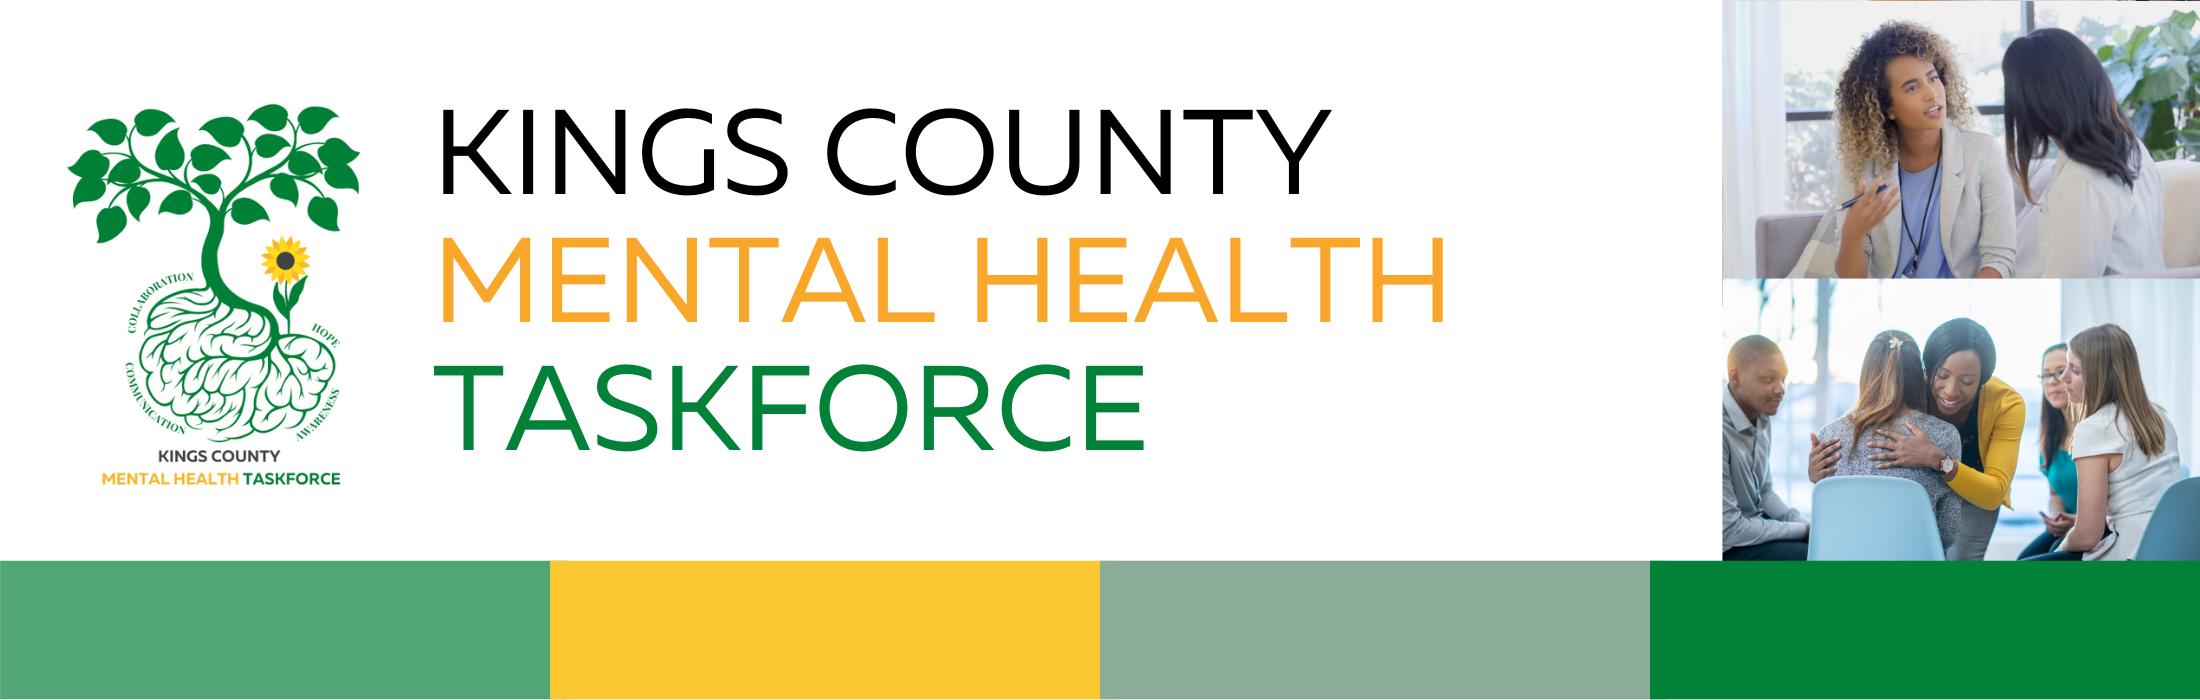 Kings County Mental Health Taskforce